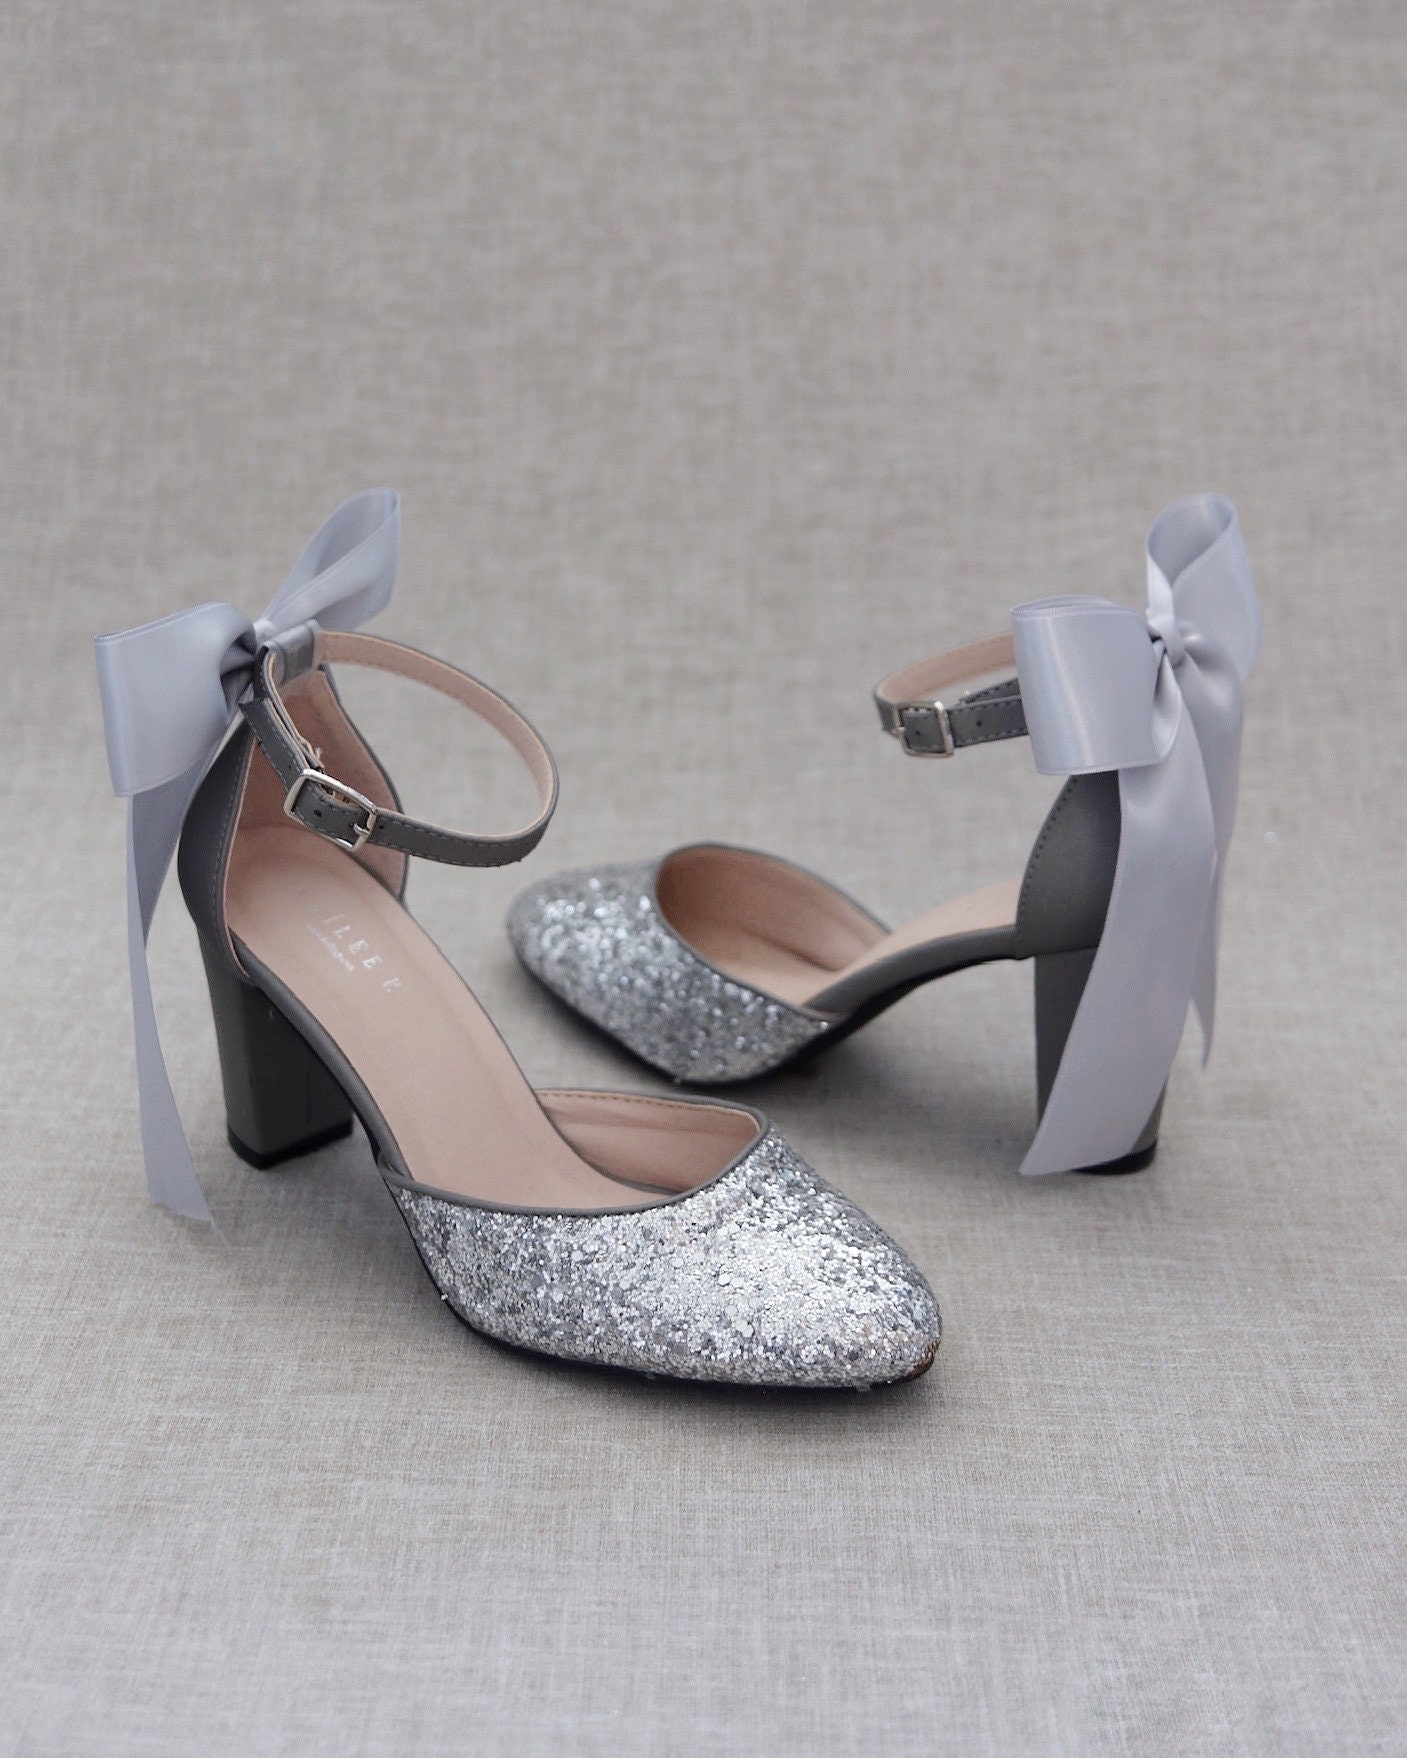 Giona Block Heels | Wedding shoes, Wedding boots, Bridal shoes